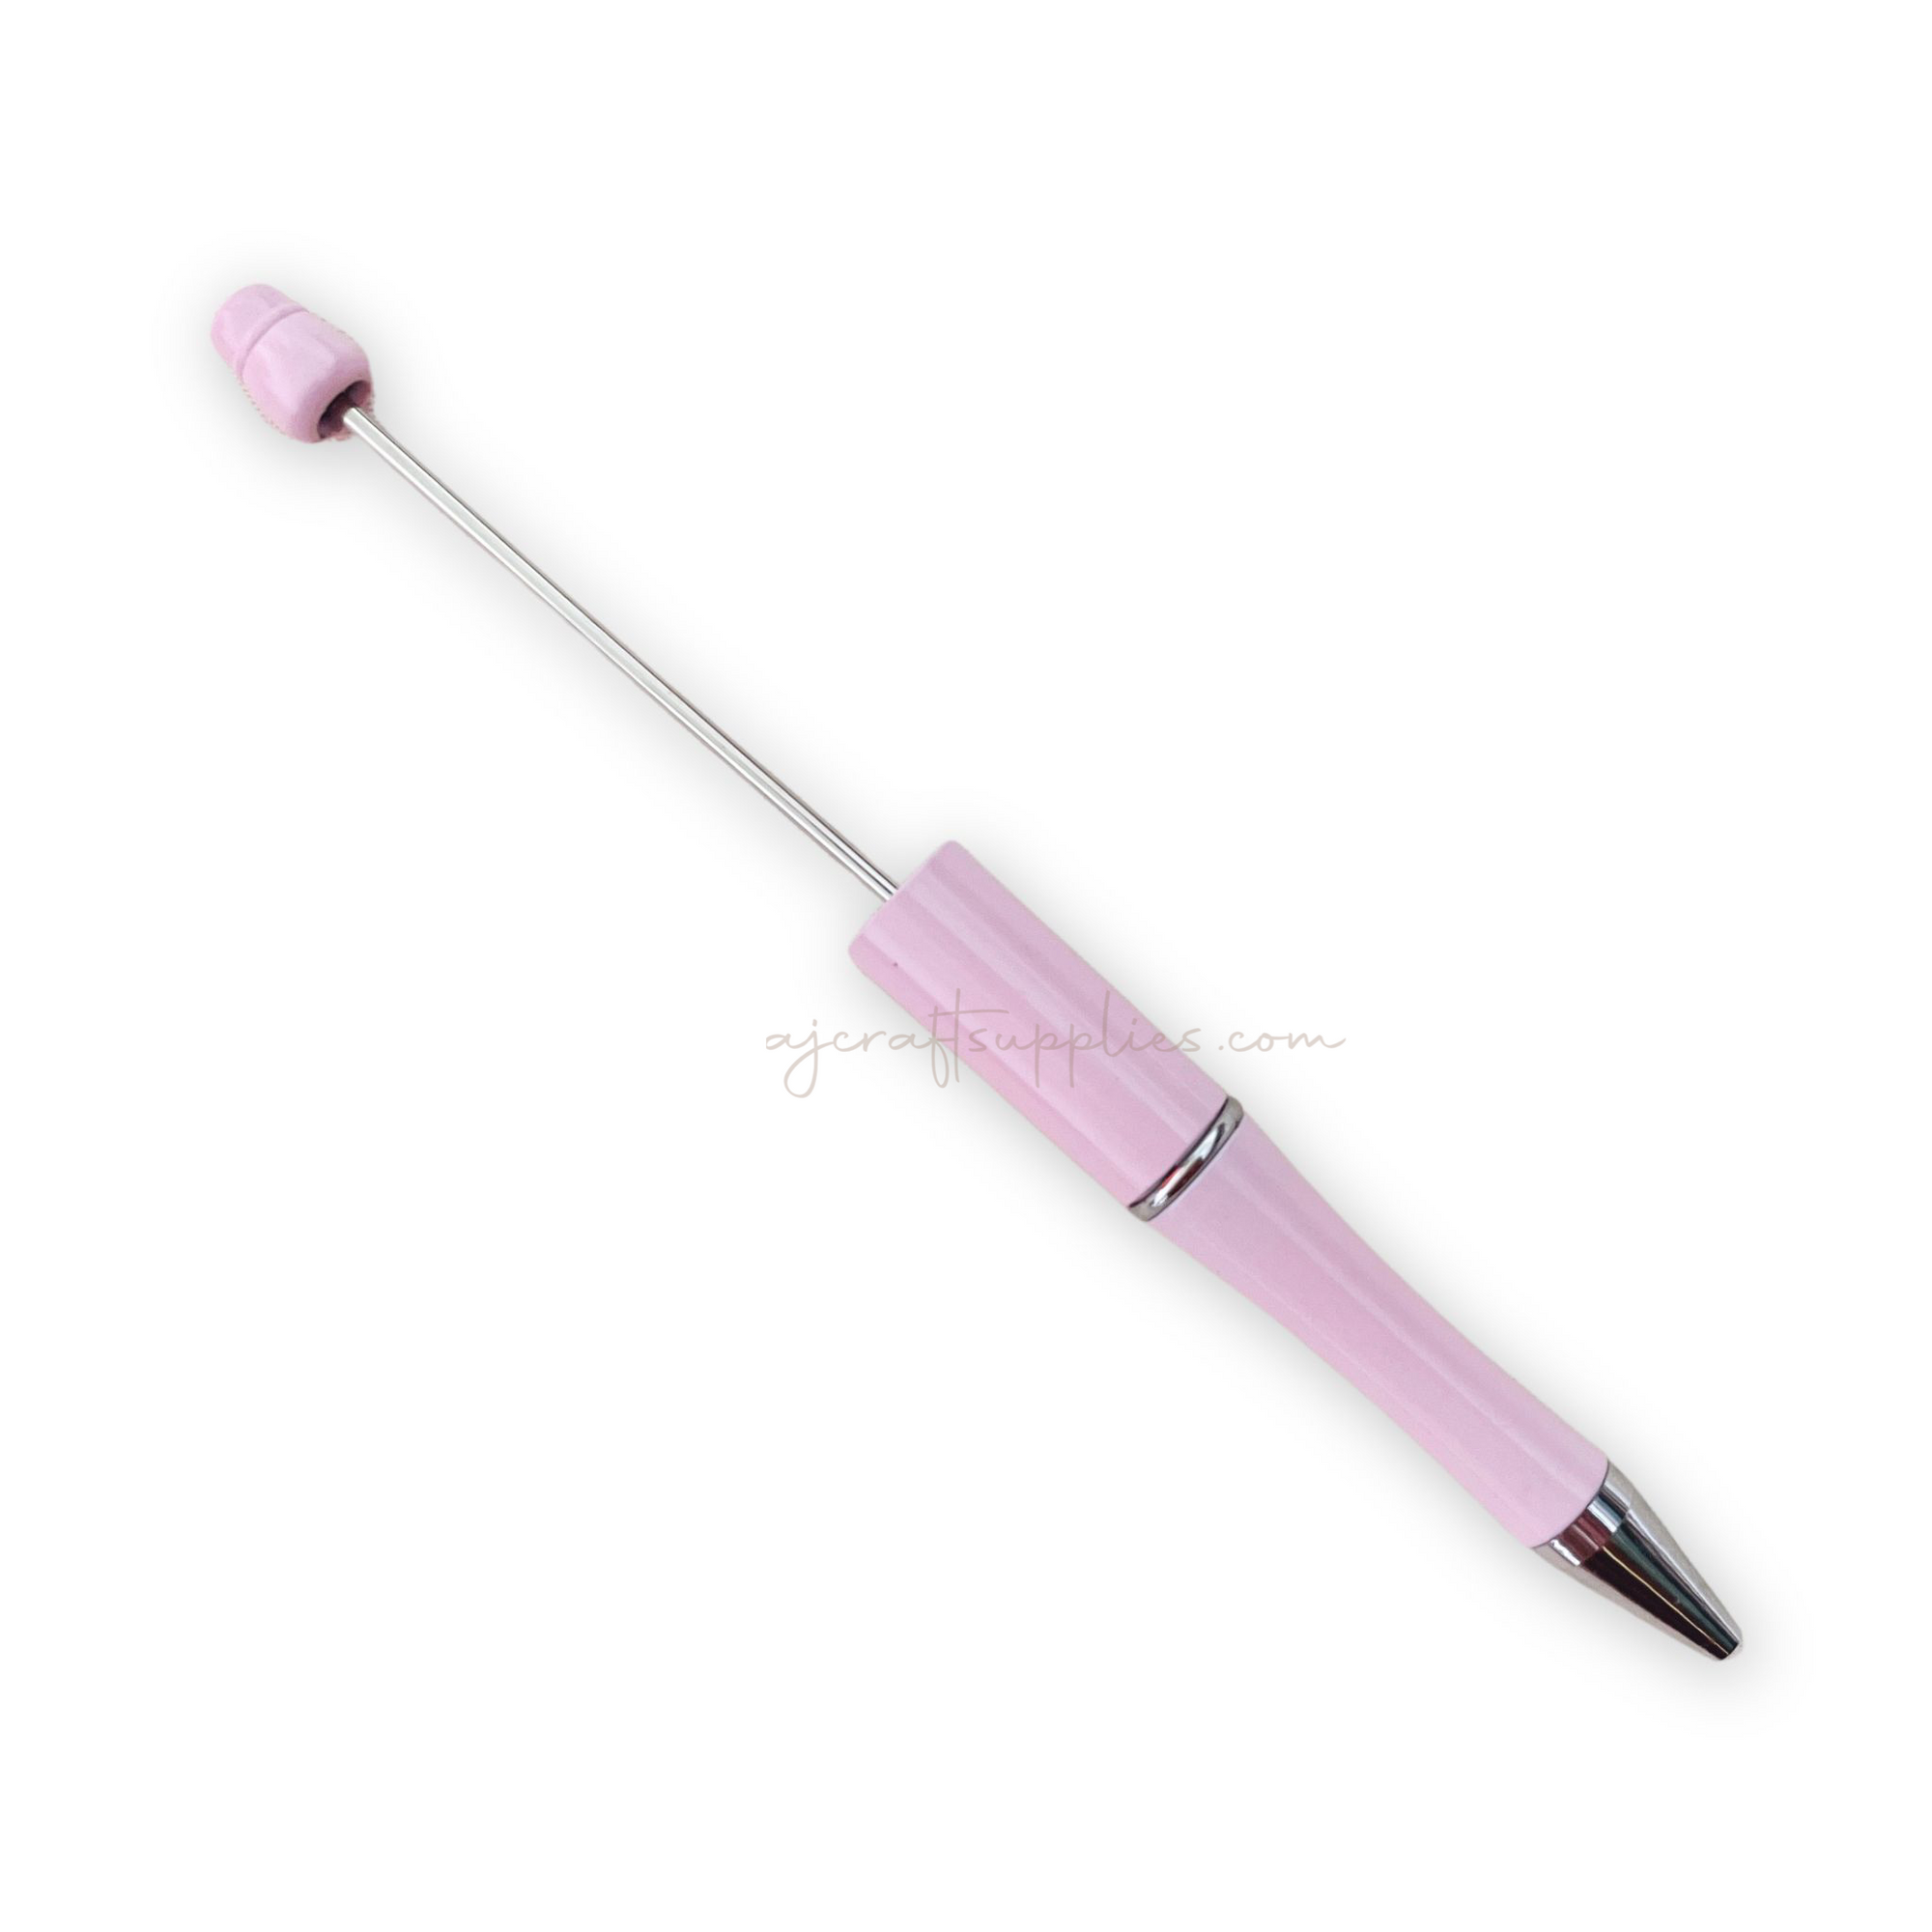 Beadable Pen Blanks - Blush Pink - Each